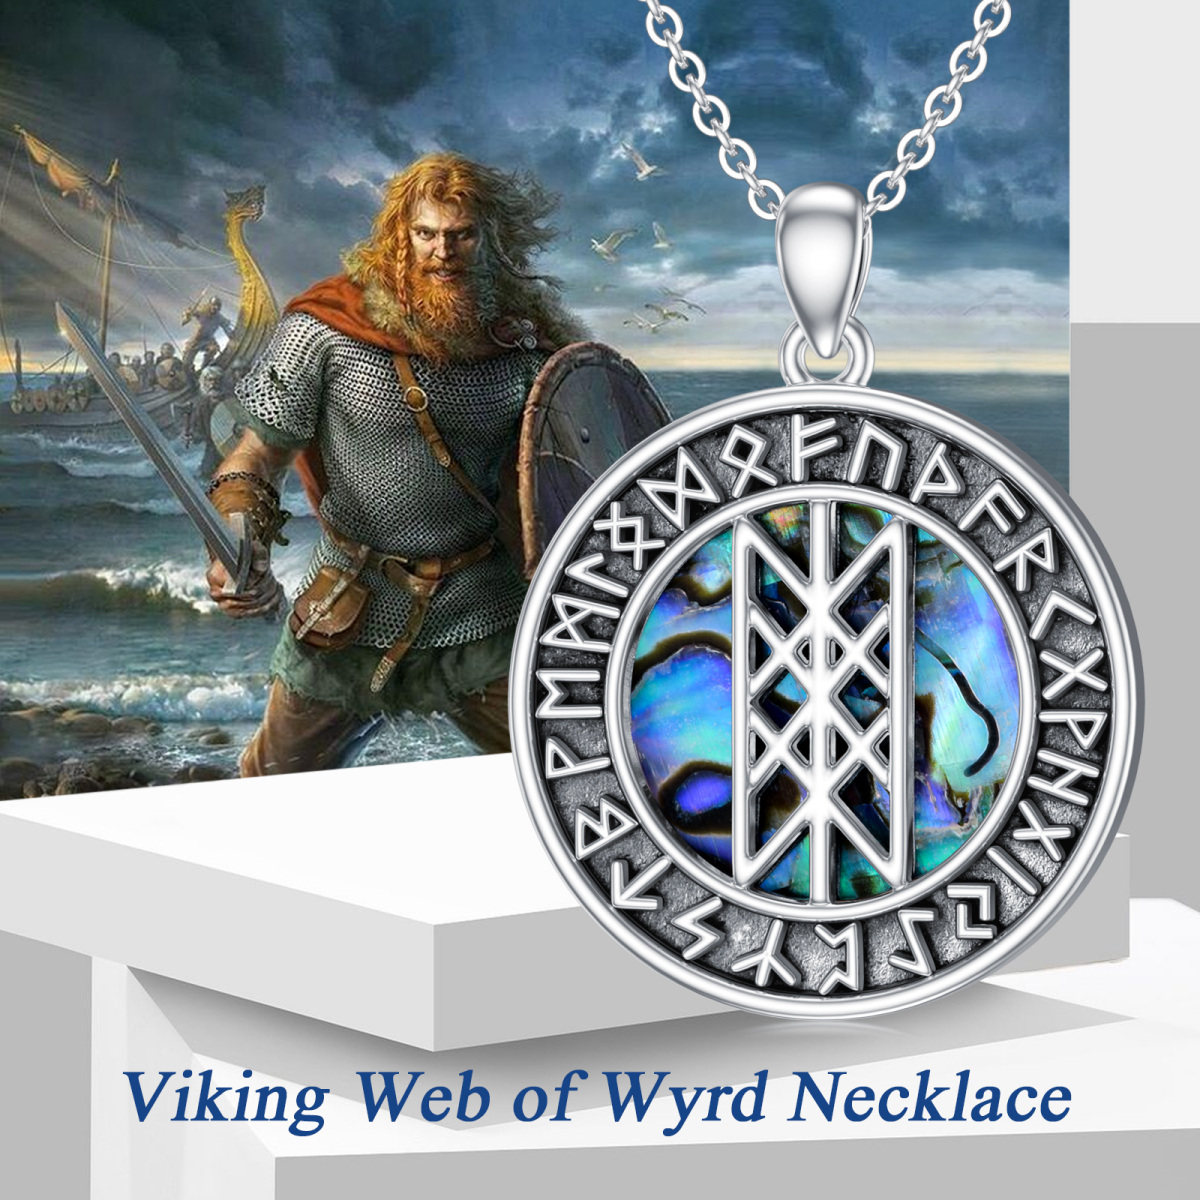 Collier en argent sterling avec pendentif abalone, coquillage et rune viking-6